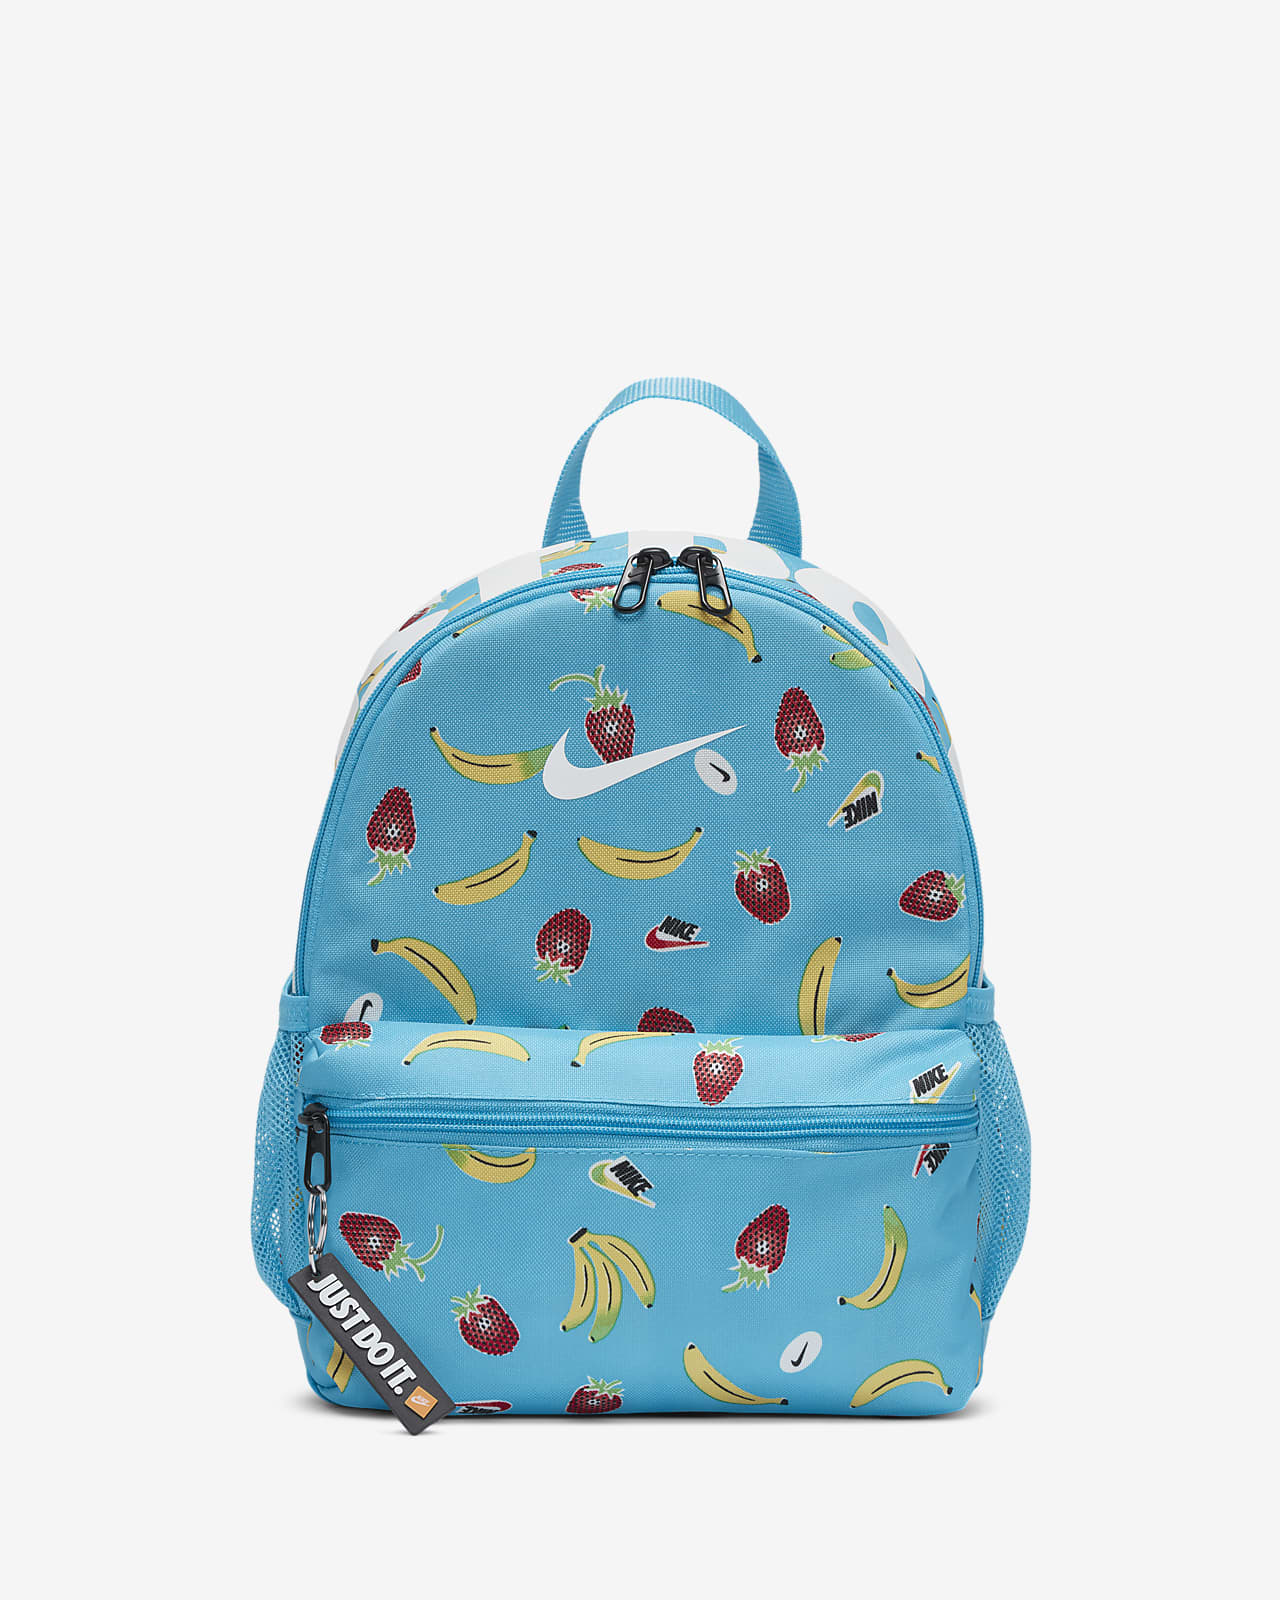 nike fruit backpack